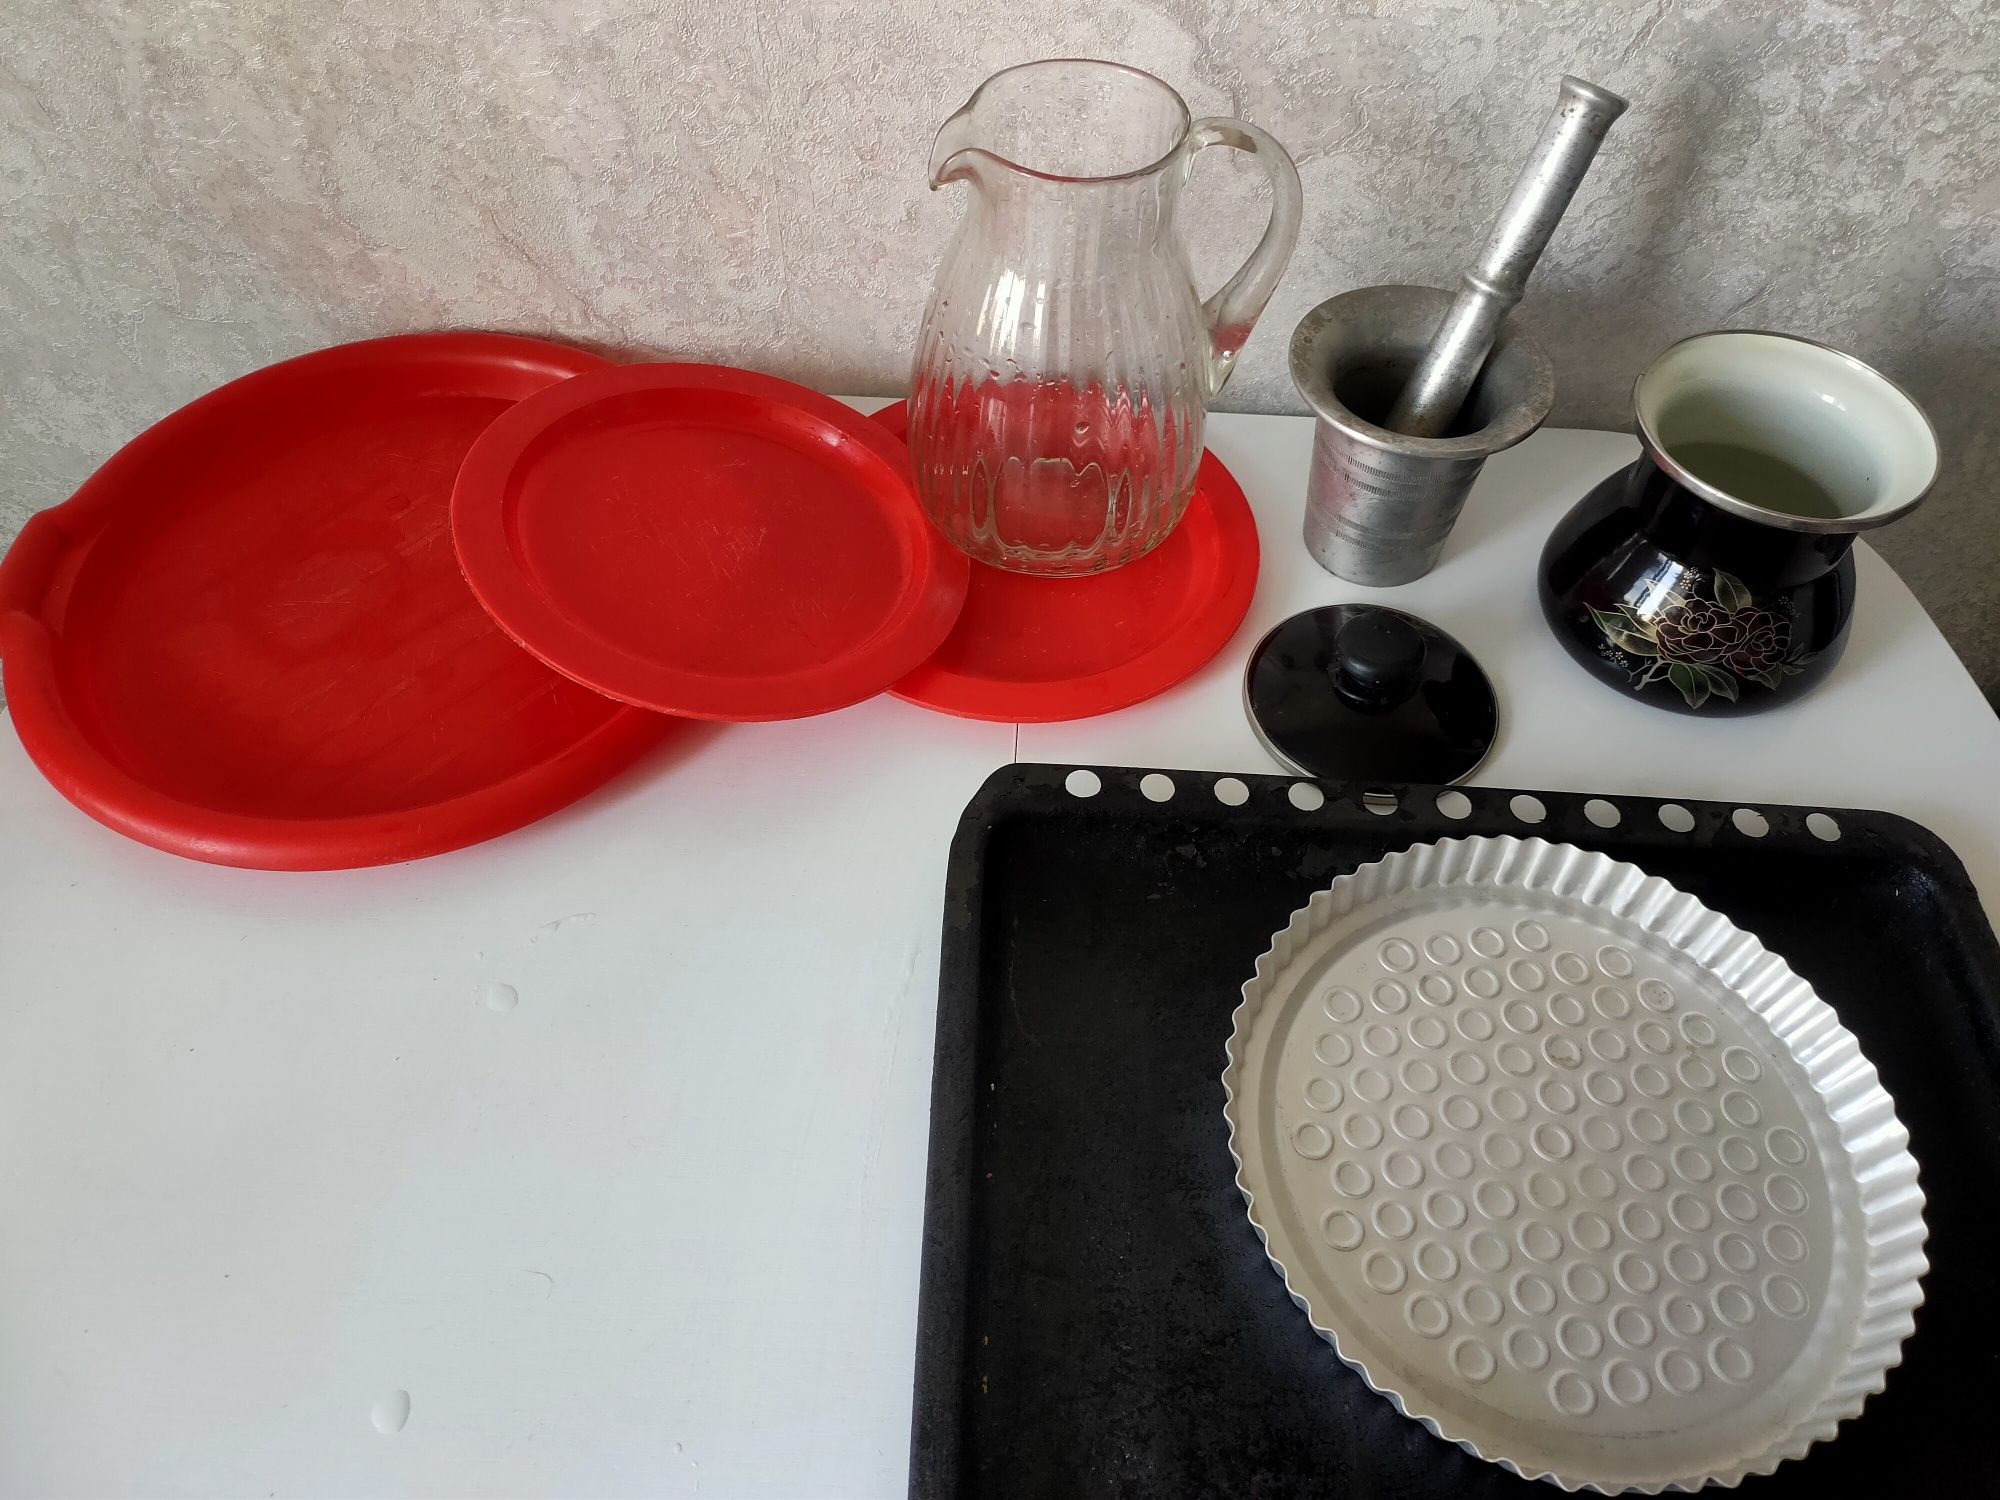 Посуда кухонная,кастрюля,миска,турочка,кувшин,чайник,поднос, сахарница